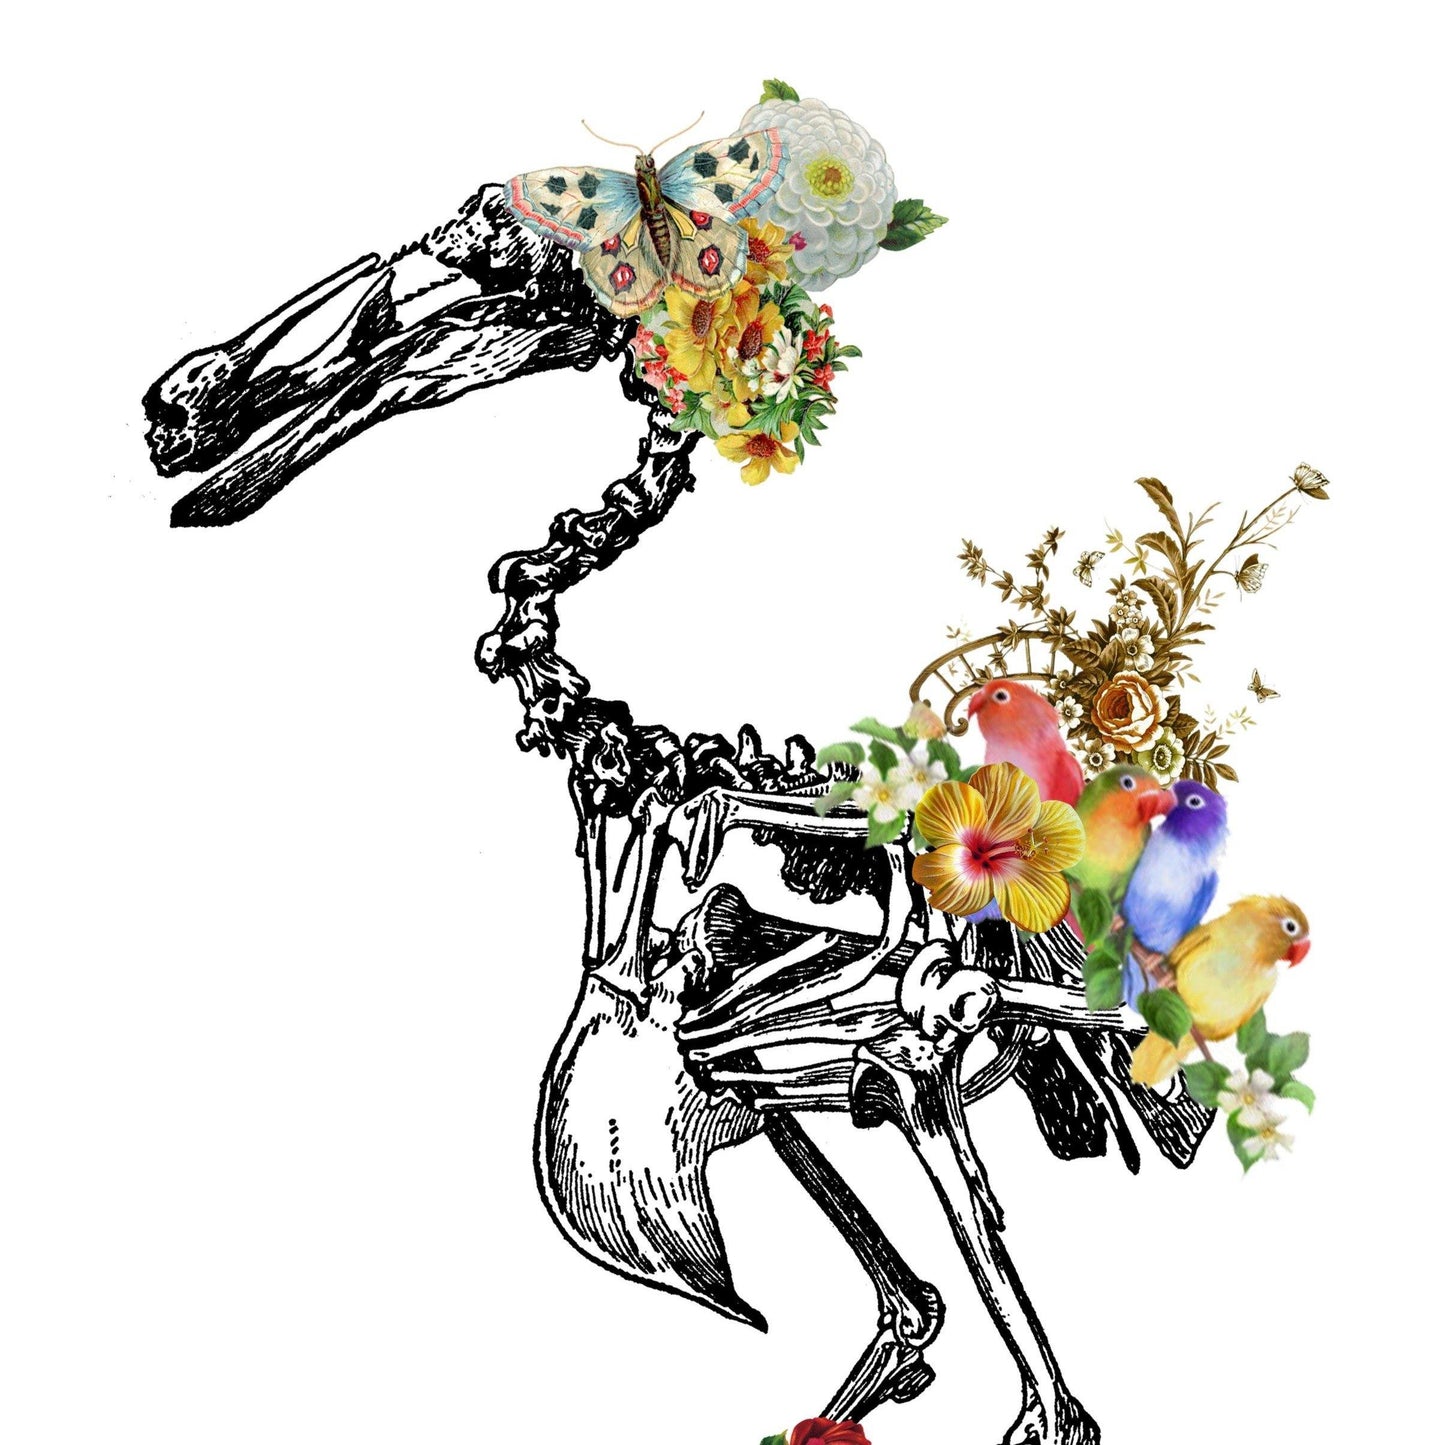 Duck Skeleton Anatomical Flowers | Anatomical Body Print | Flower Art Print | Illustration Poster - 98types